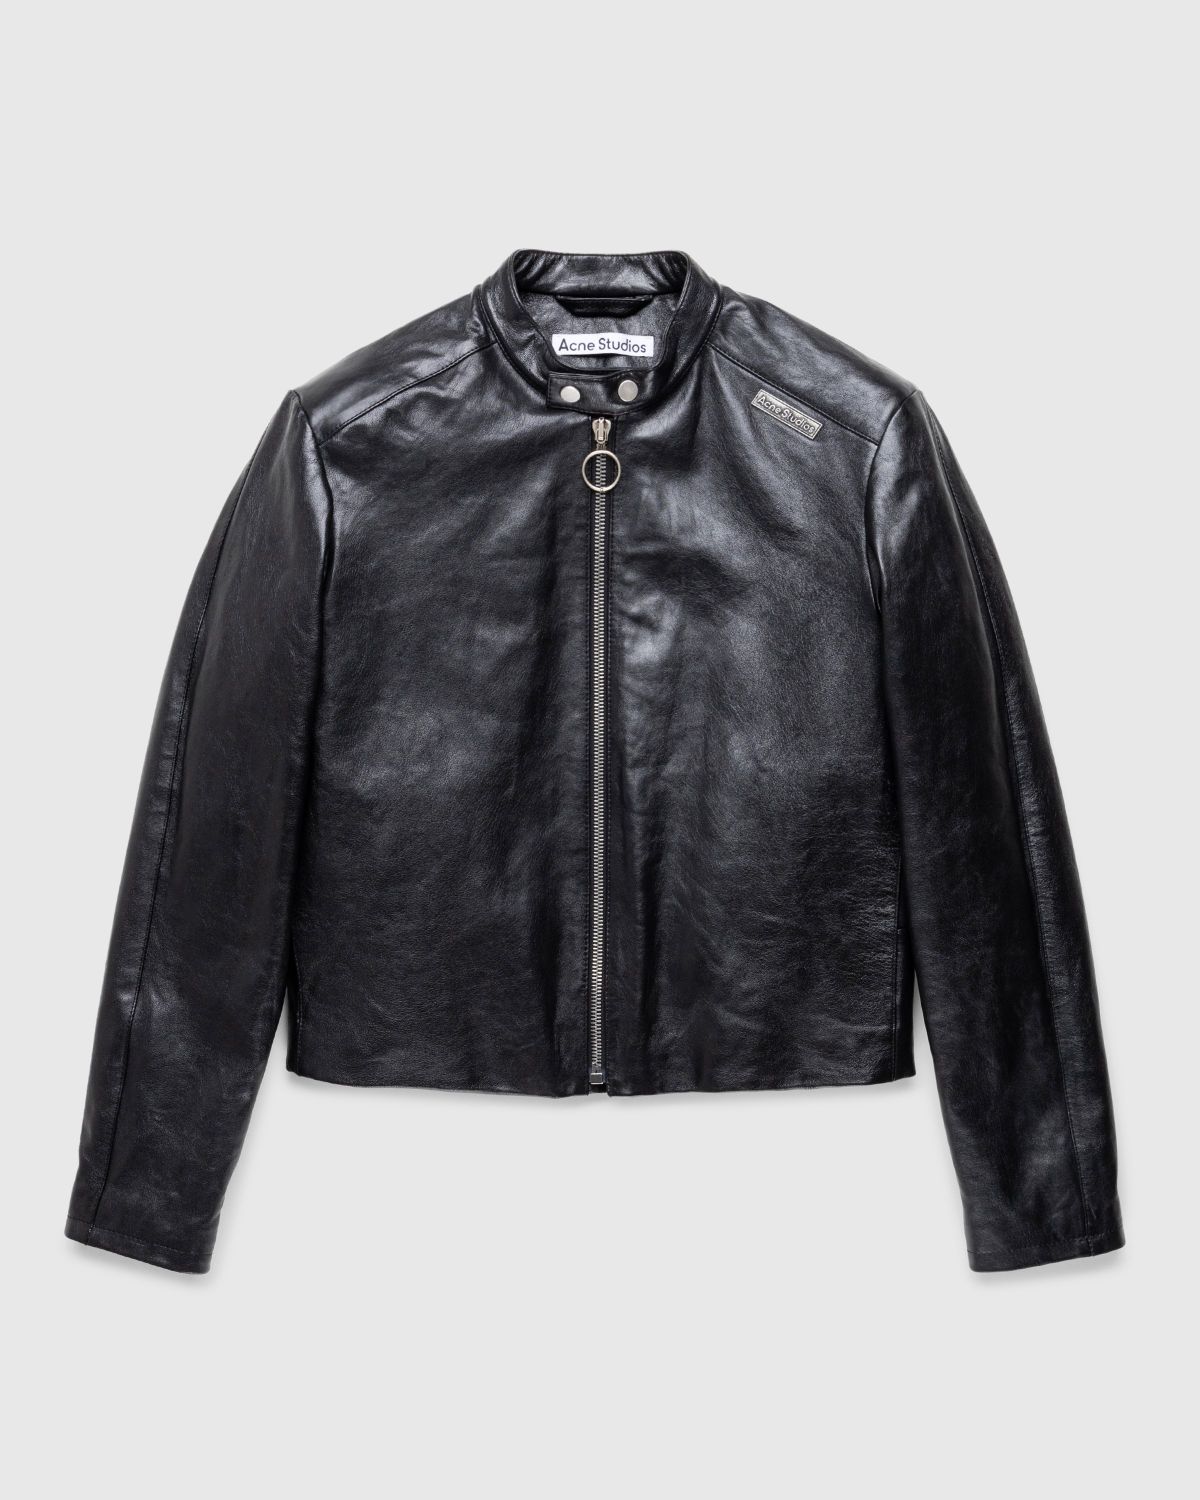 Acne Studios – Leather Jacket Black